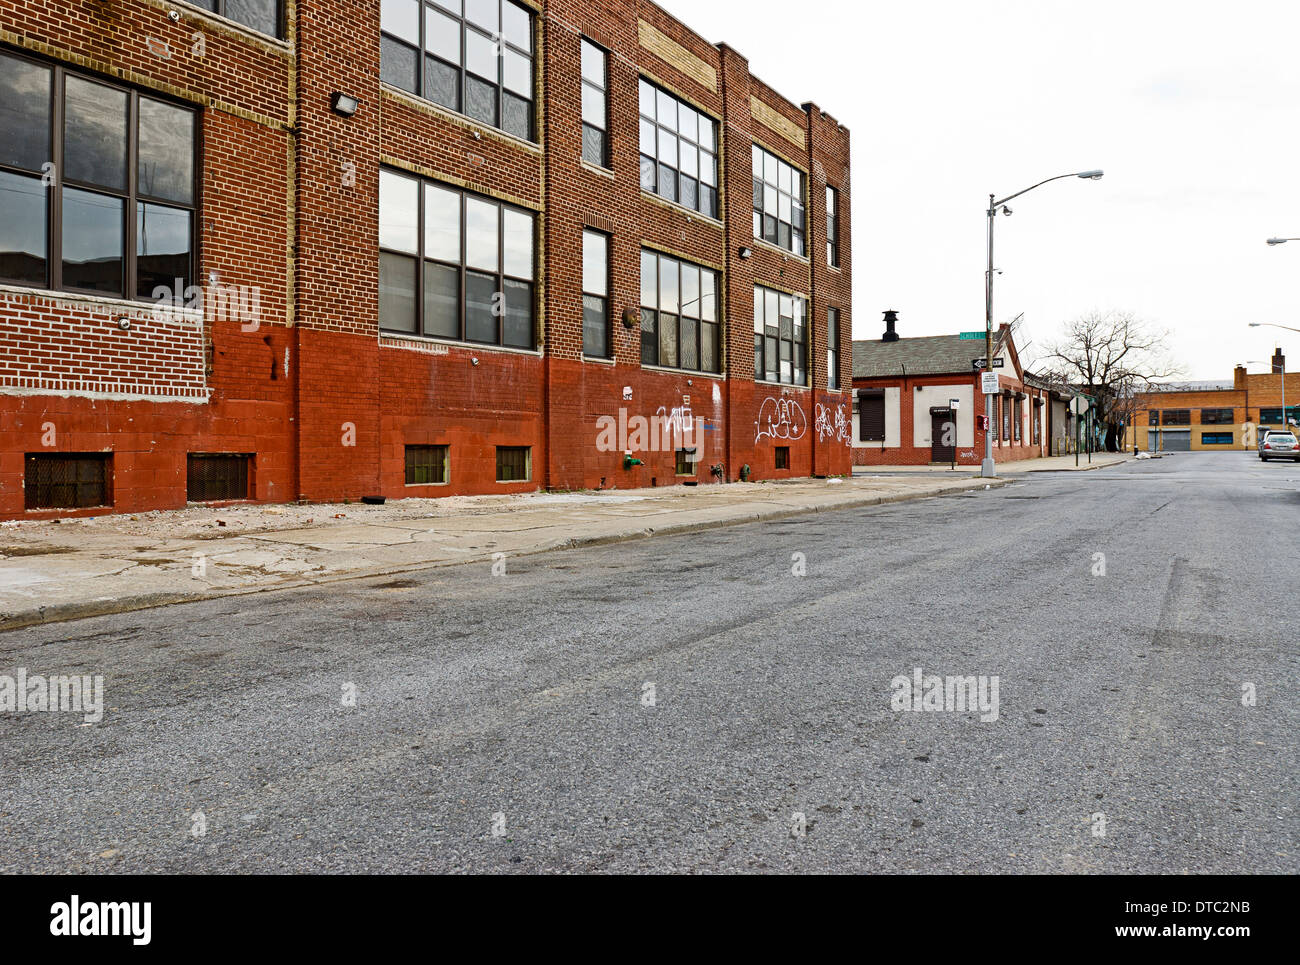 Deserted empty urban dangerous street scene with old warehouse buildings. Stock Photo